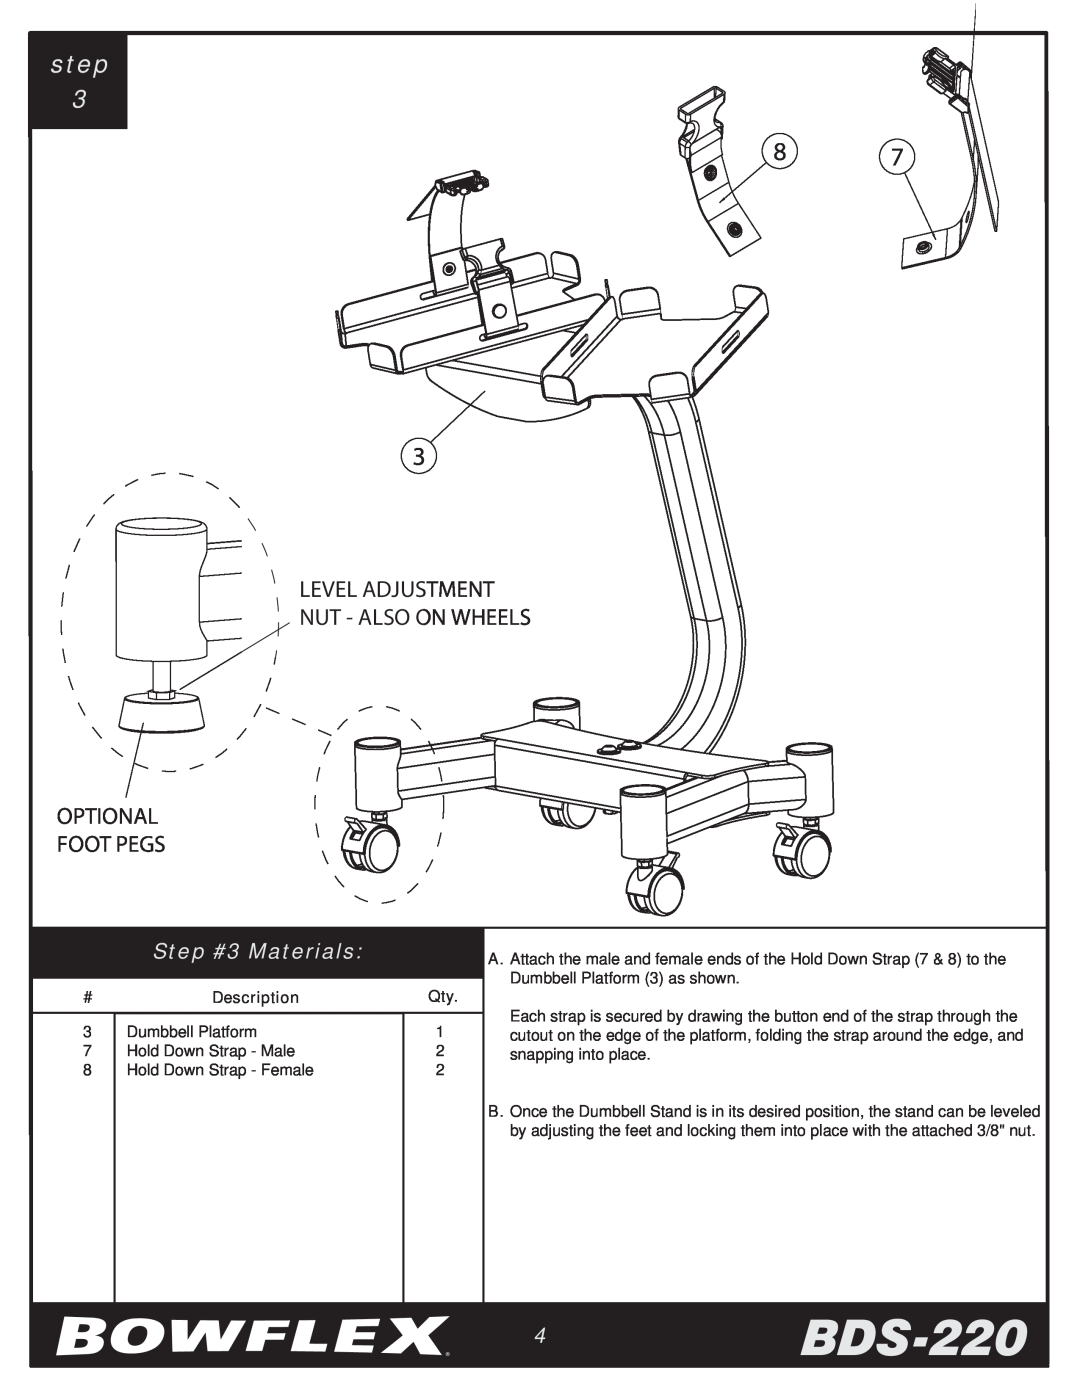 Bowflex manual 4BDS-220, Step #3 Materials, step, Level Adjustment Nut - Also On Wheels Optional Foot Pegs, Description 